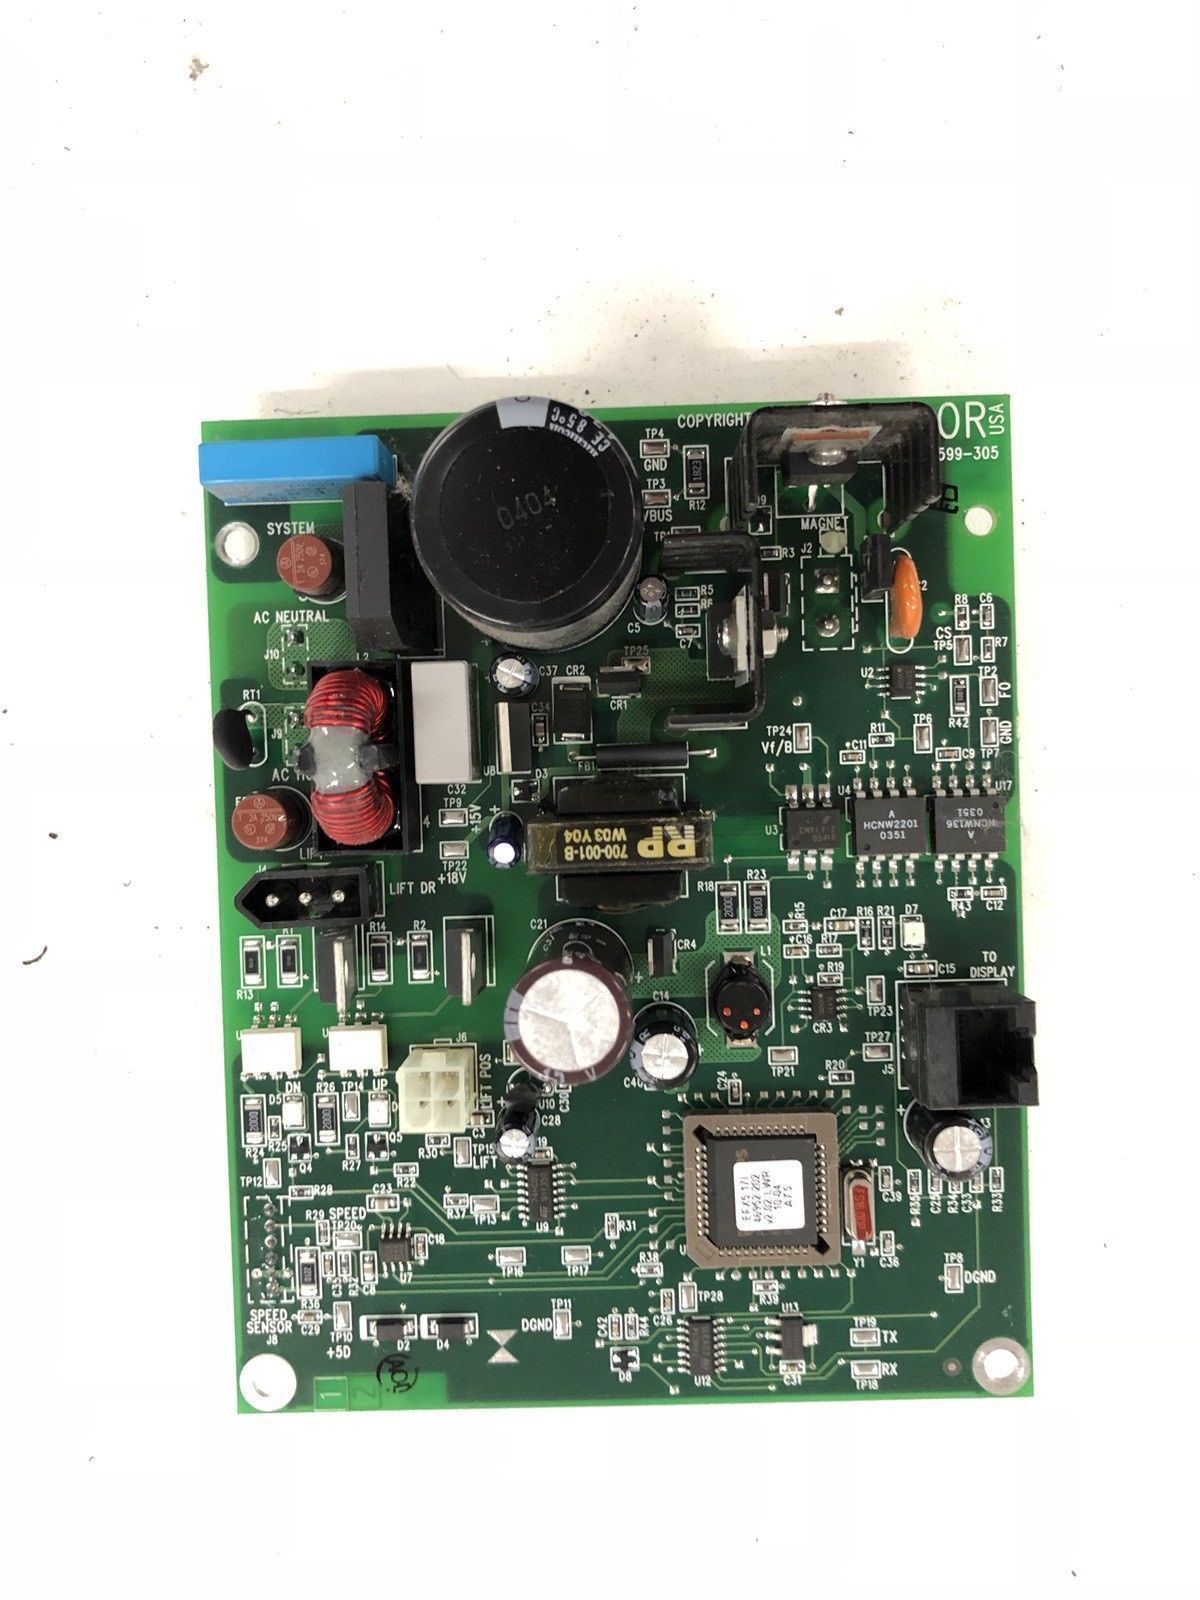 Precor efx 5.17i Elliptical Controller Lower Control Board MCB 46909-501 (Used)